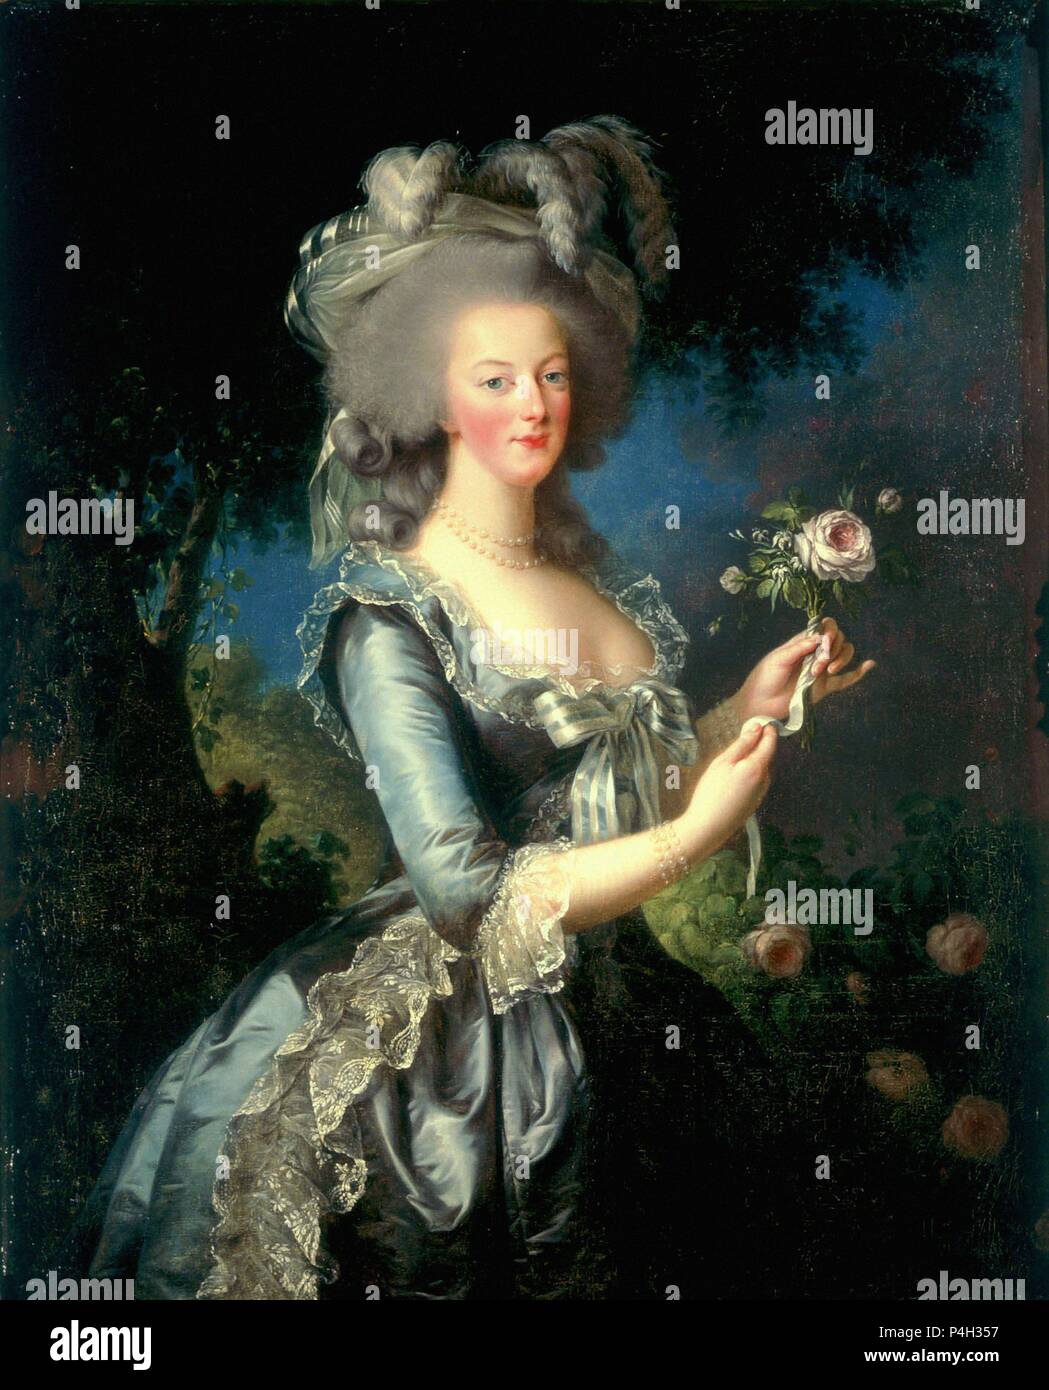 'Marie-Antoinette with the Rose', 1783, Oil on canvas, 130 x 87 cm. Author: Louise Élisabeth Vigée Le Brun (1755-1842). Location: MUSEO PALACIO, VERSAILLES, FRANCE. Also known as: RETRATO DE MARIA ANTONIETA DE AUSTRIA (1755-1793) REINA DE FRANCIA CON UNA ROSA. Stock Photo